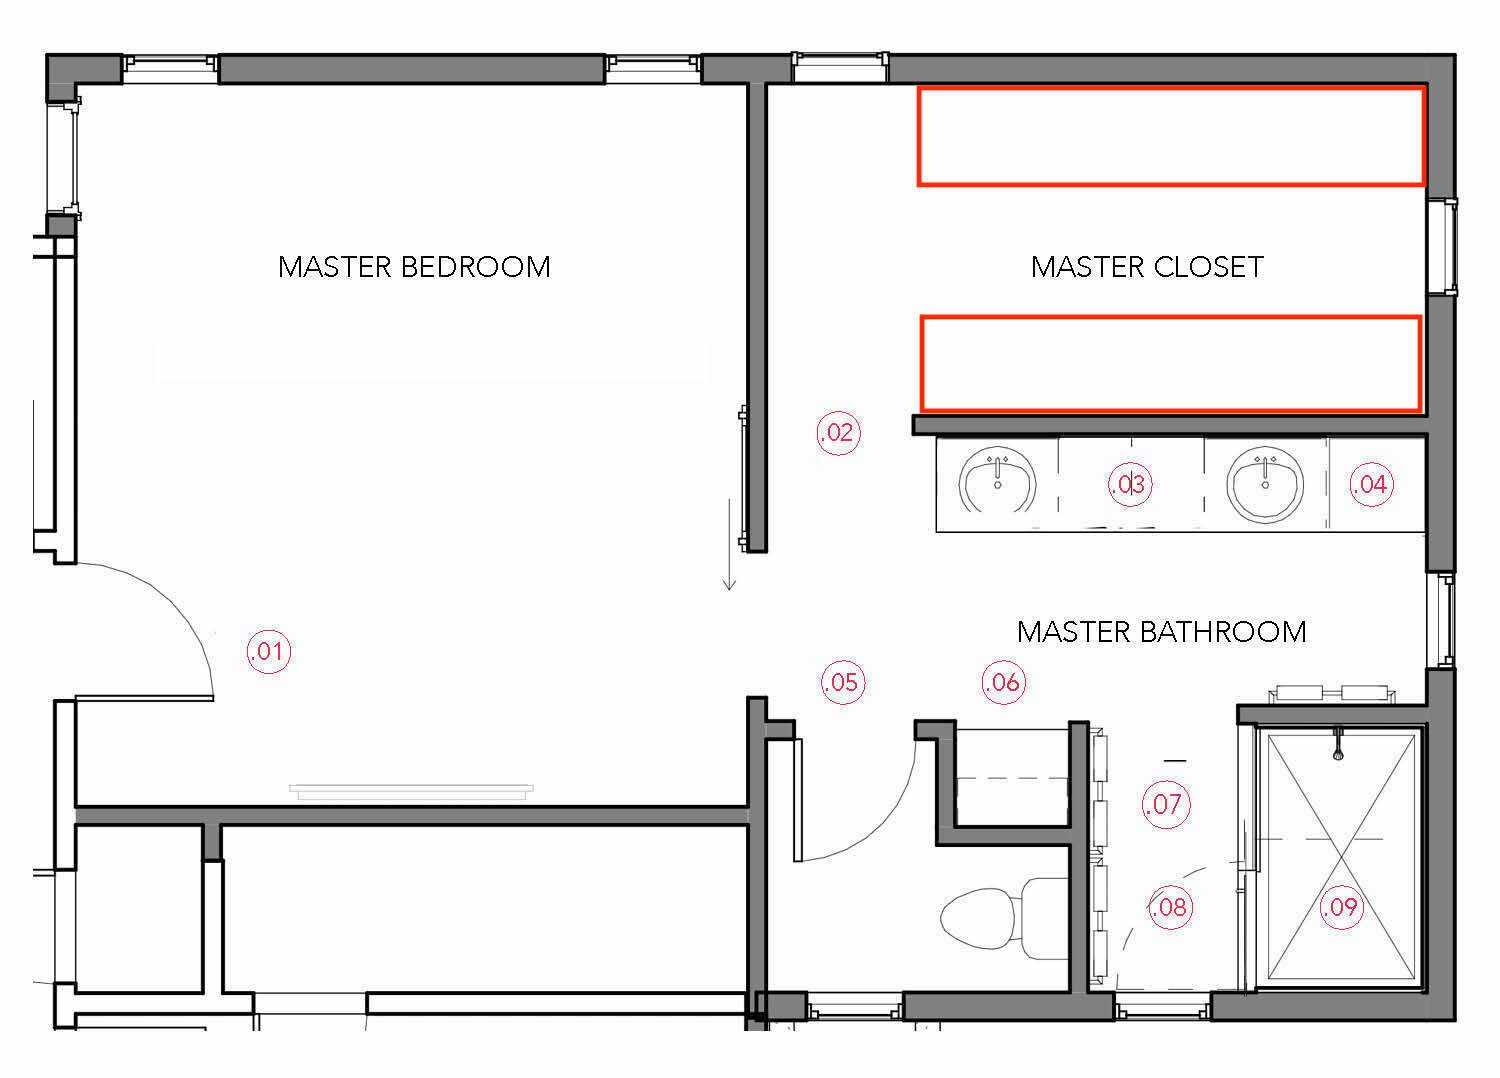 Small Master Closet Floor Plan Design